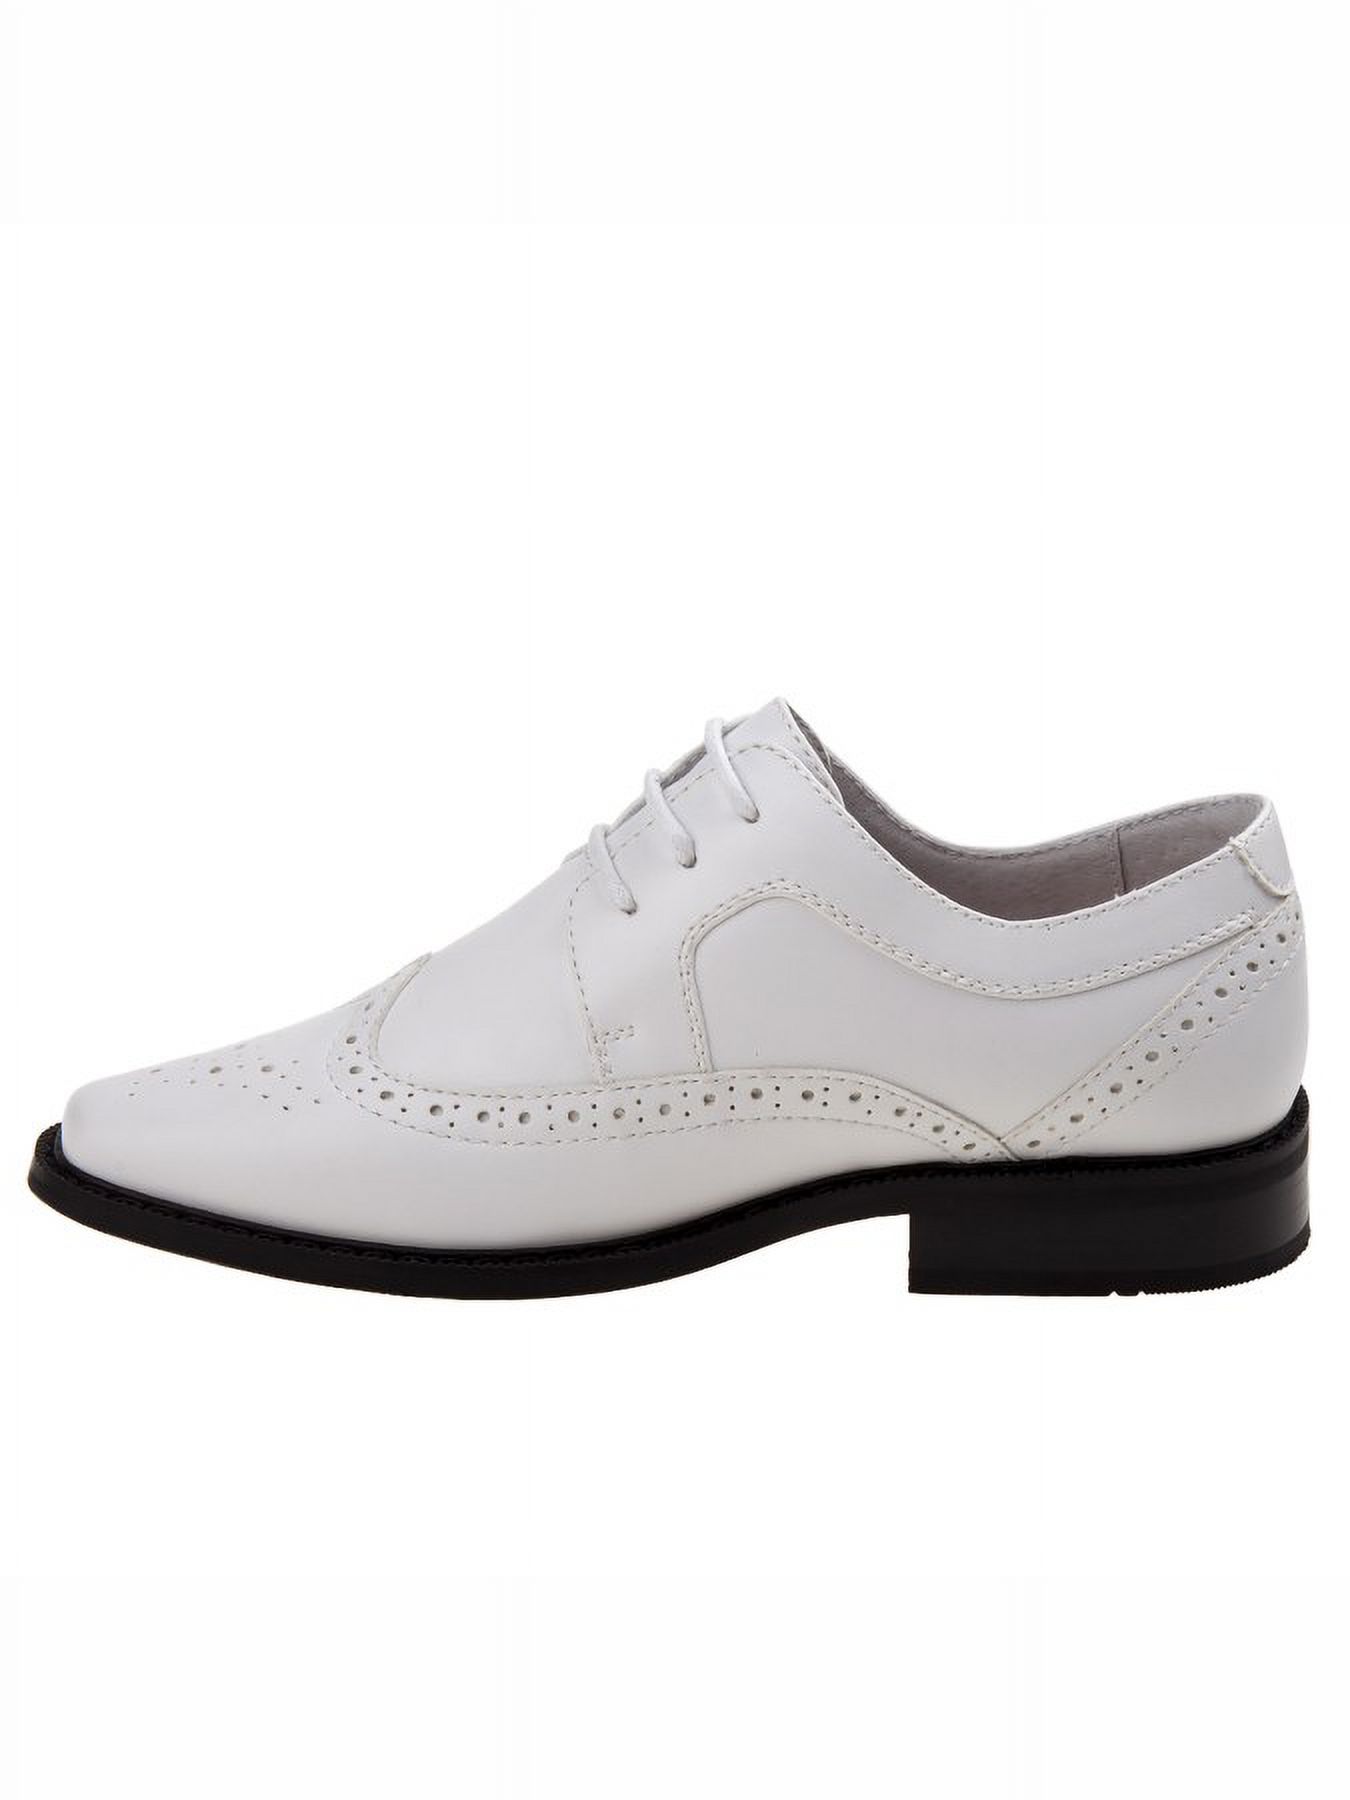 Joseph Allen Boys Lace Toddler Dress Shoes - White, 12 - image 3 of 5